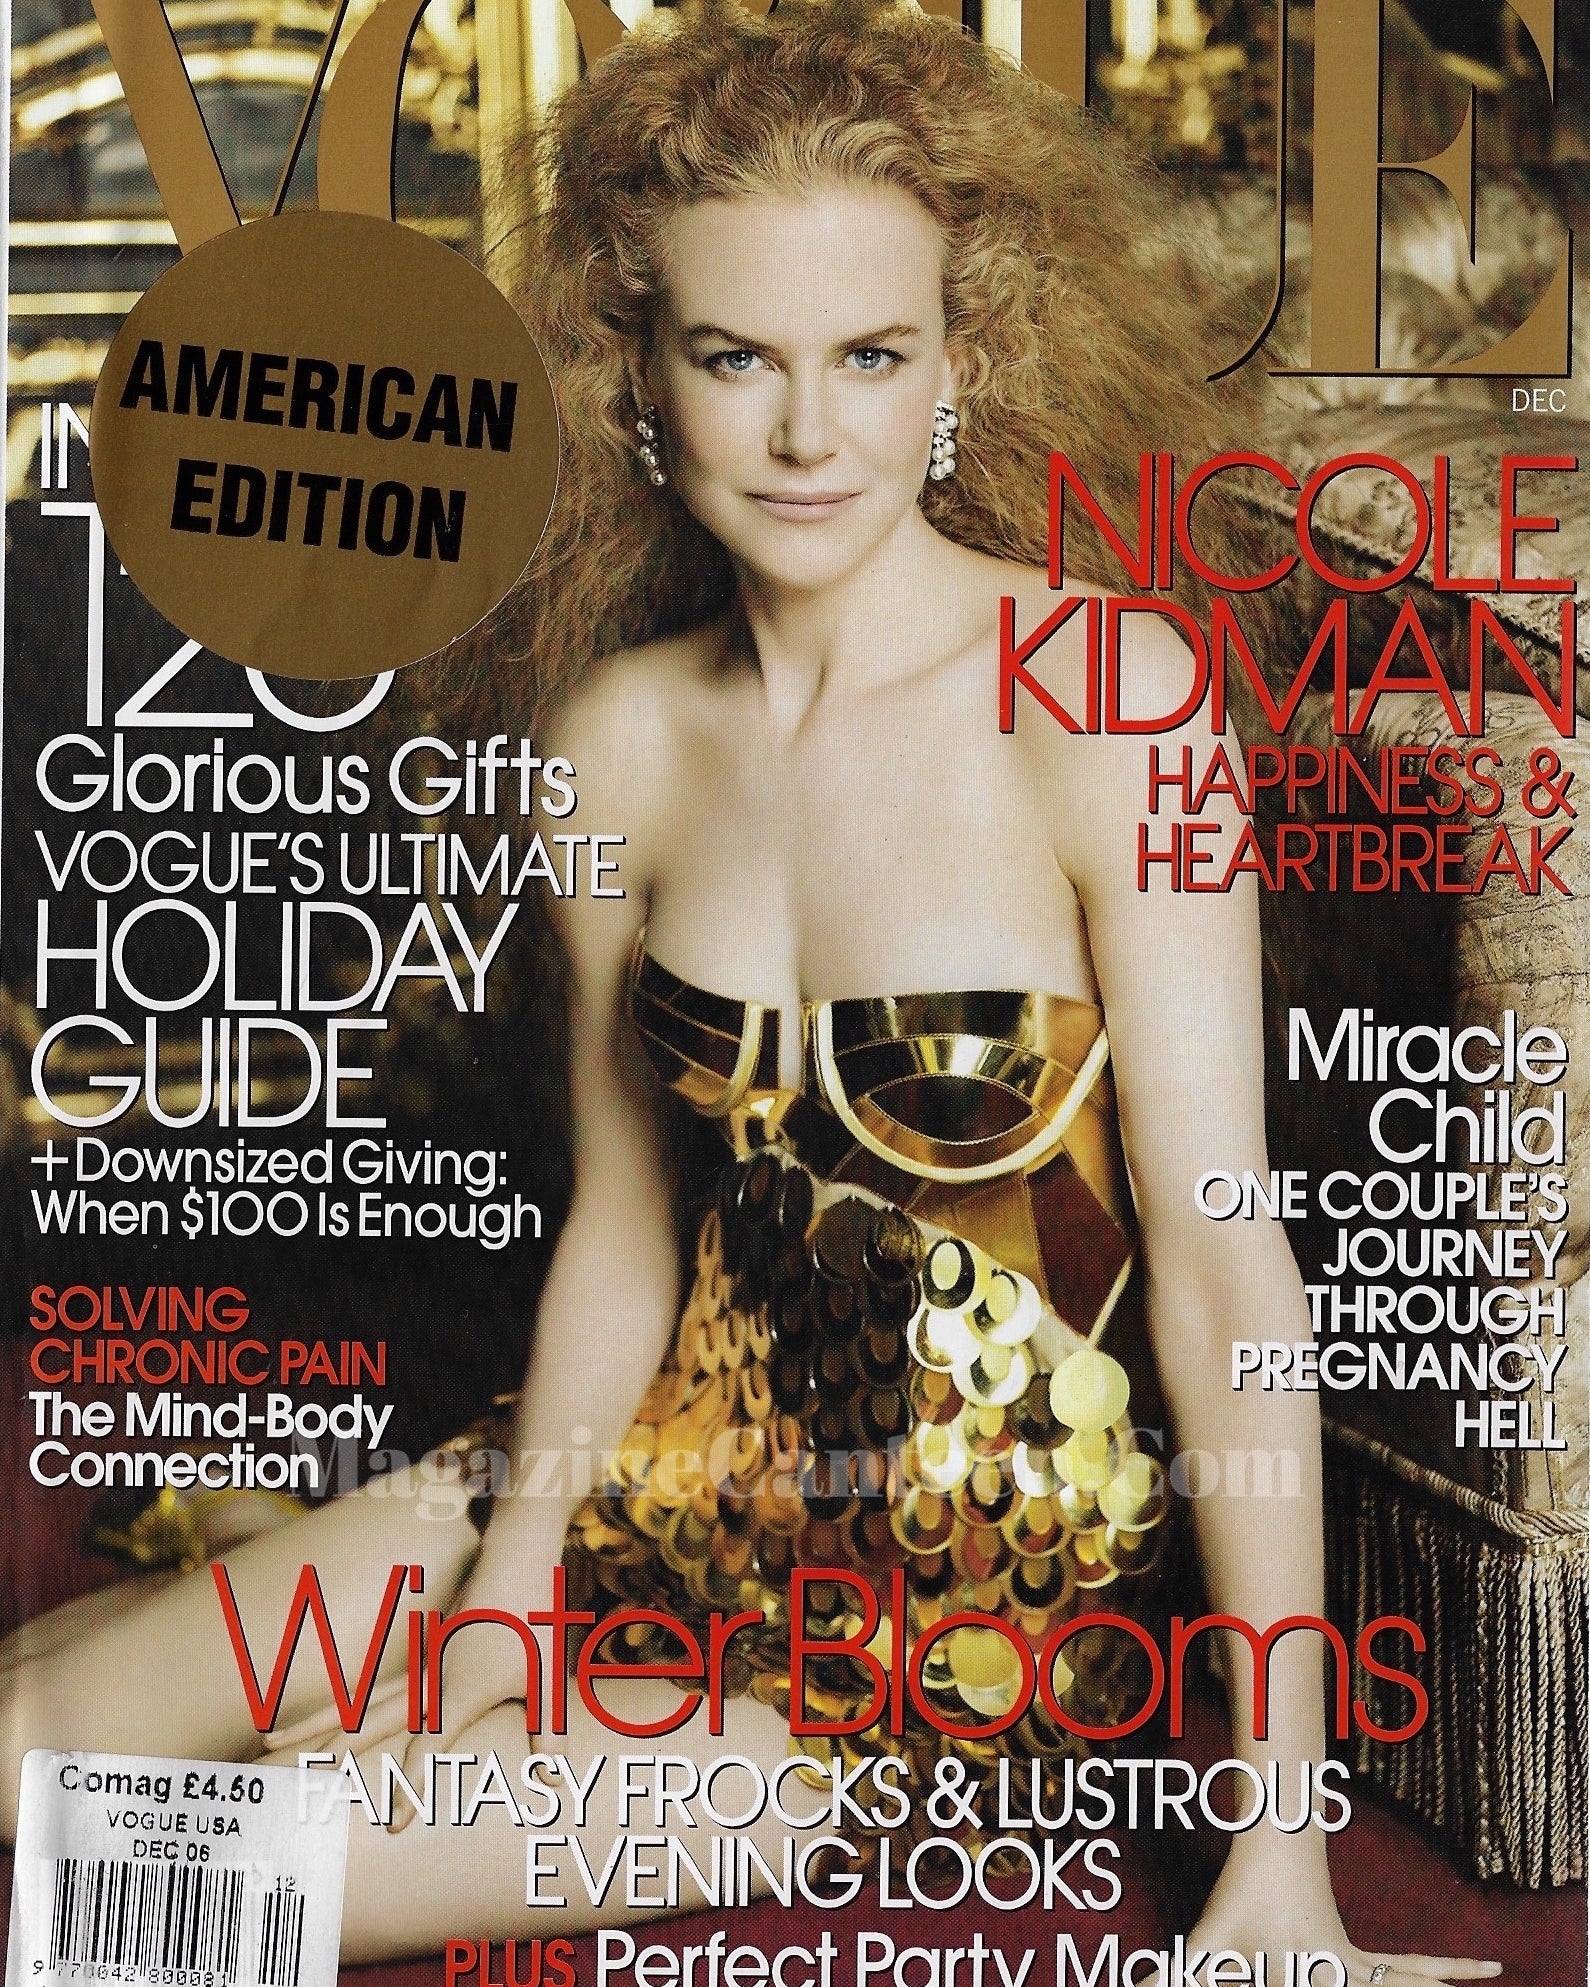 Vogue USA Magazine December 2006 - Nicole Kidman